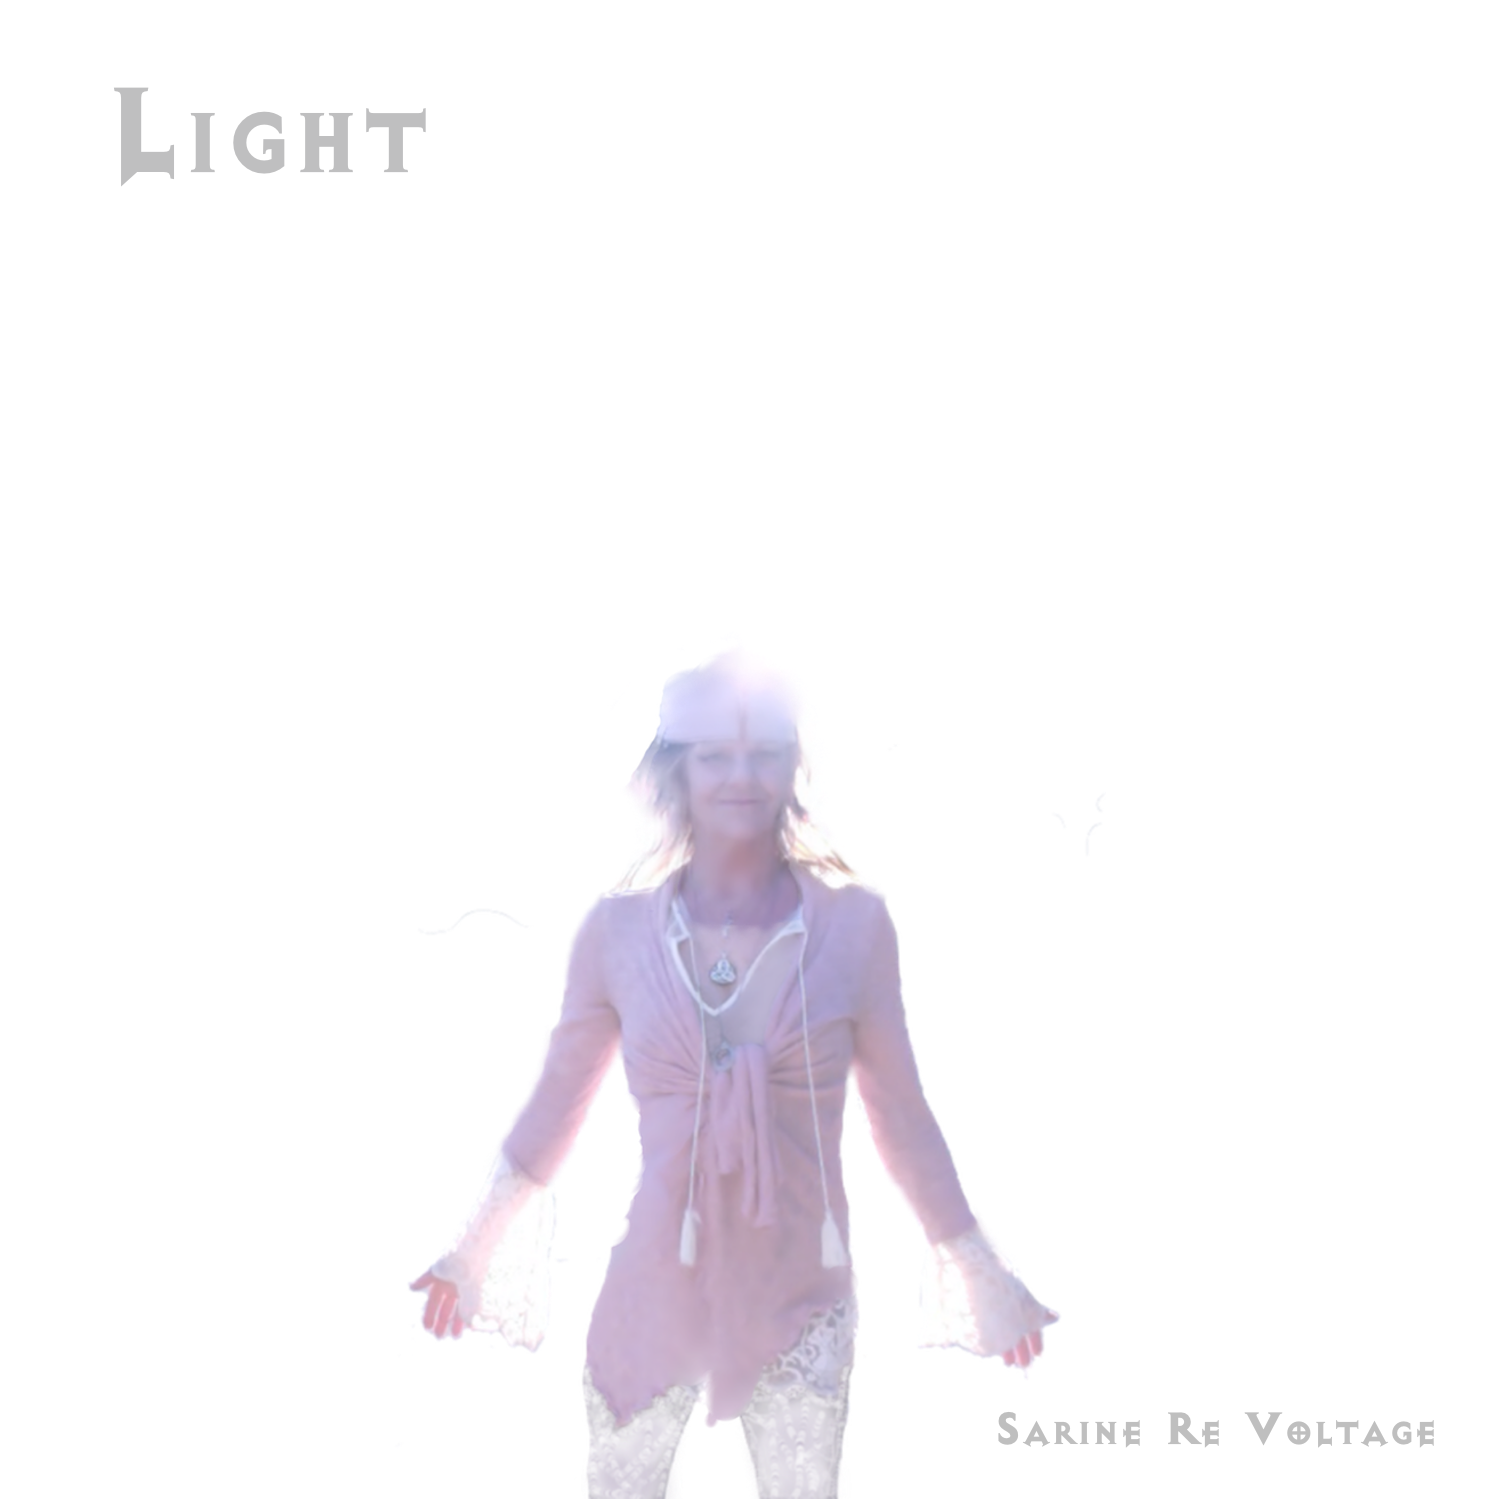 Light - album cover (srv nlrgd).png